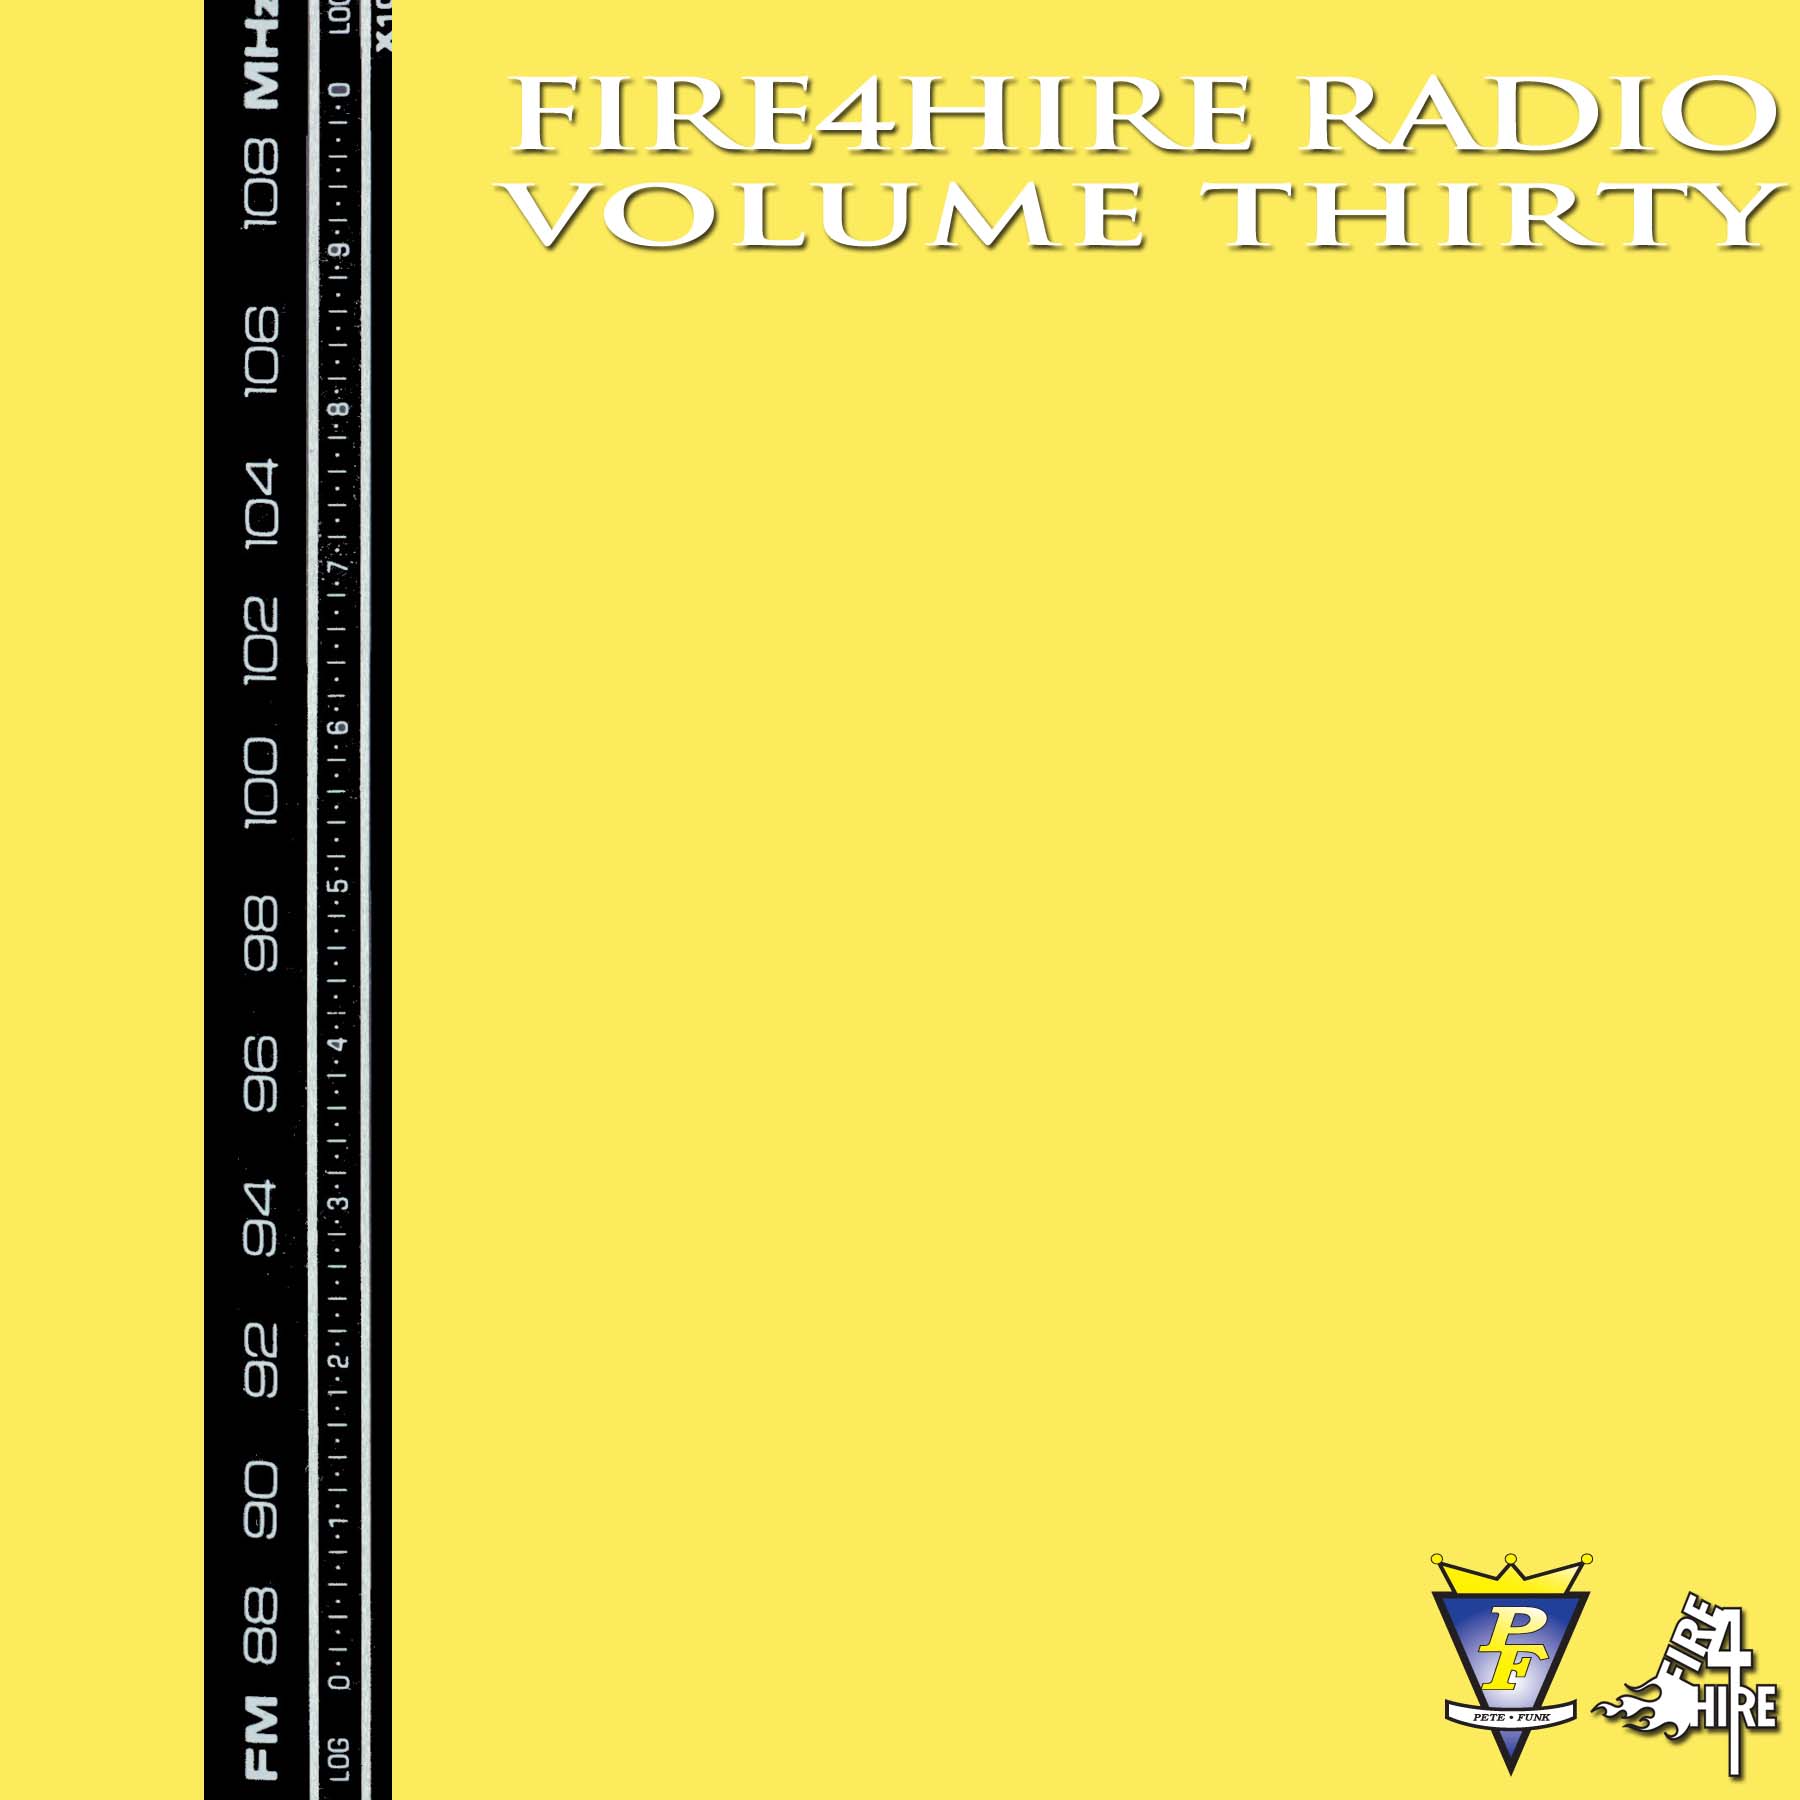 Pete Funk Fire 4 Hire Radio Volume 30